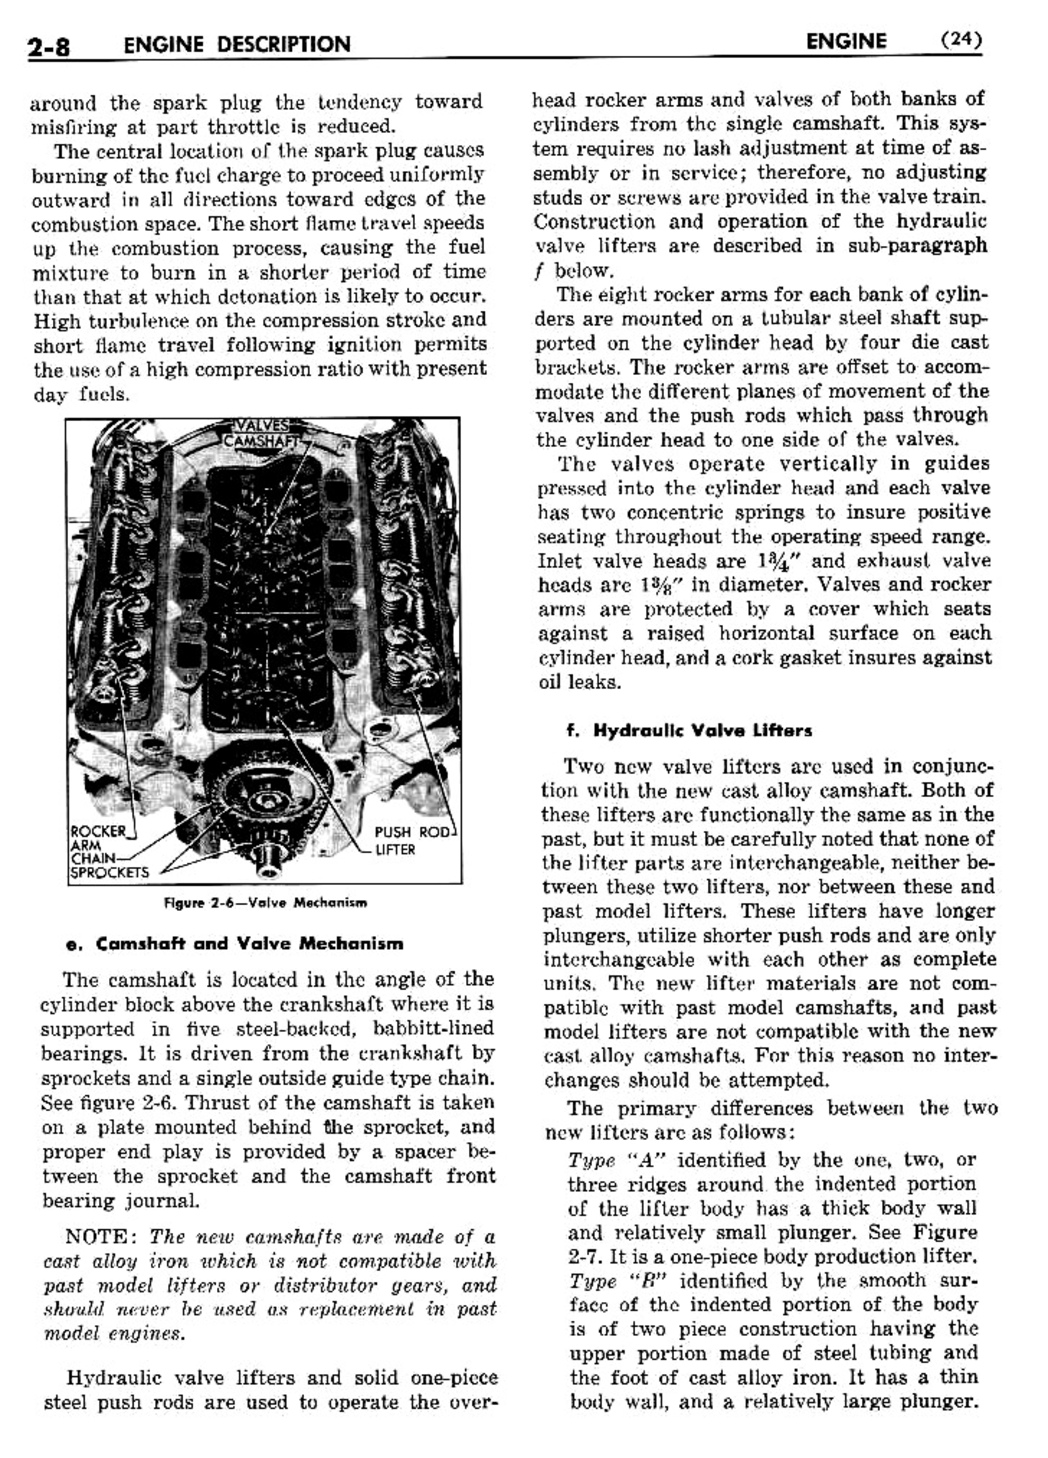 n_03 1956 Buick Shop Manual - Engine-008-008.jpg